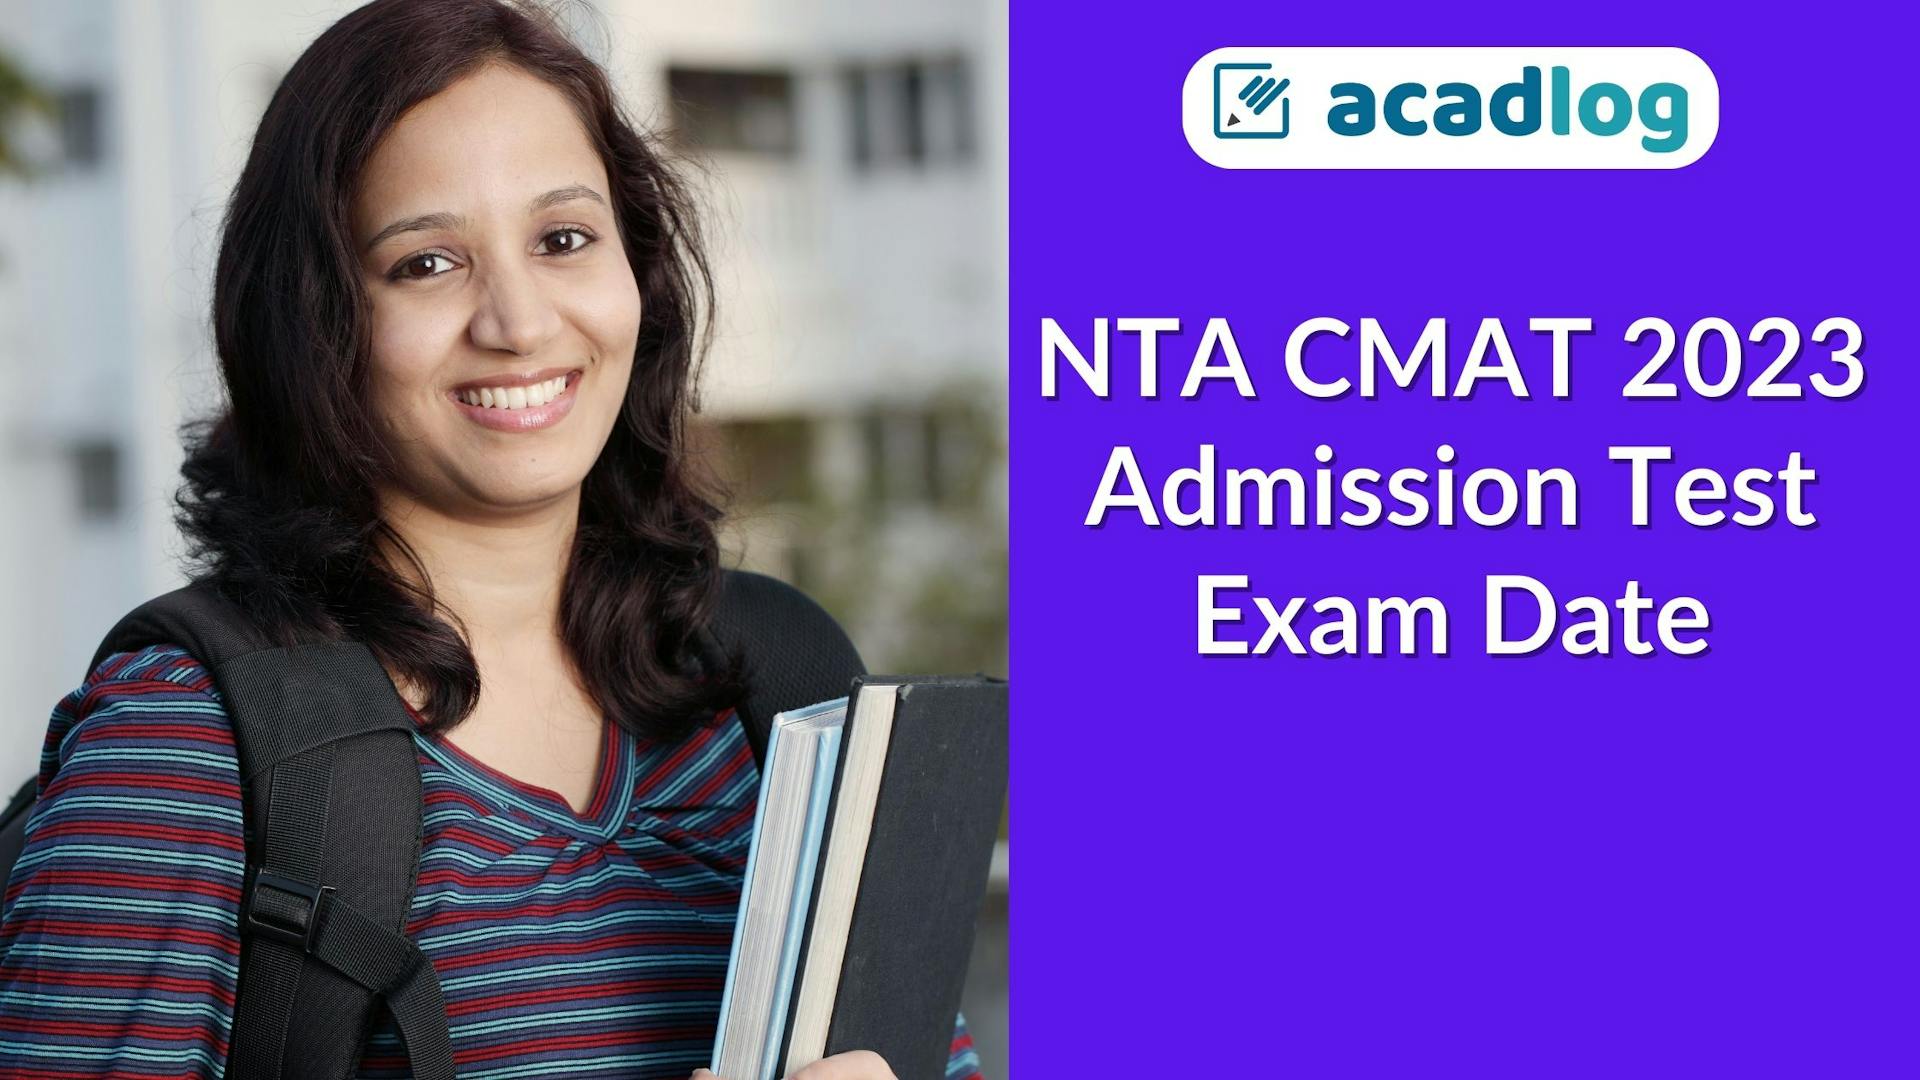 Acadlog: NTA CMAT 2023 Admission Test Exam Date